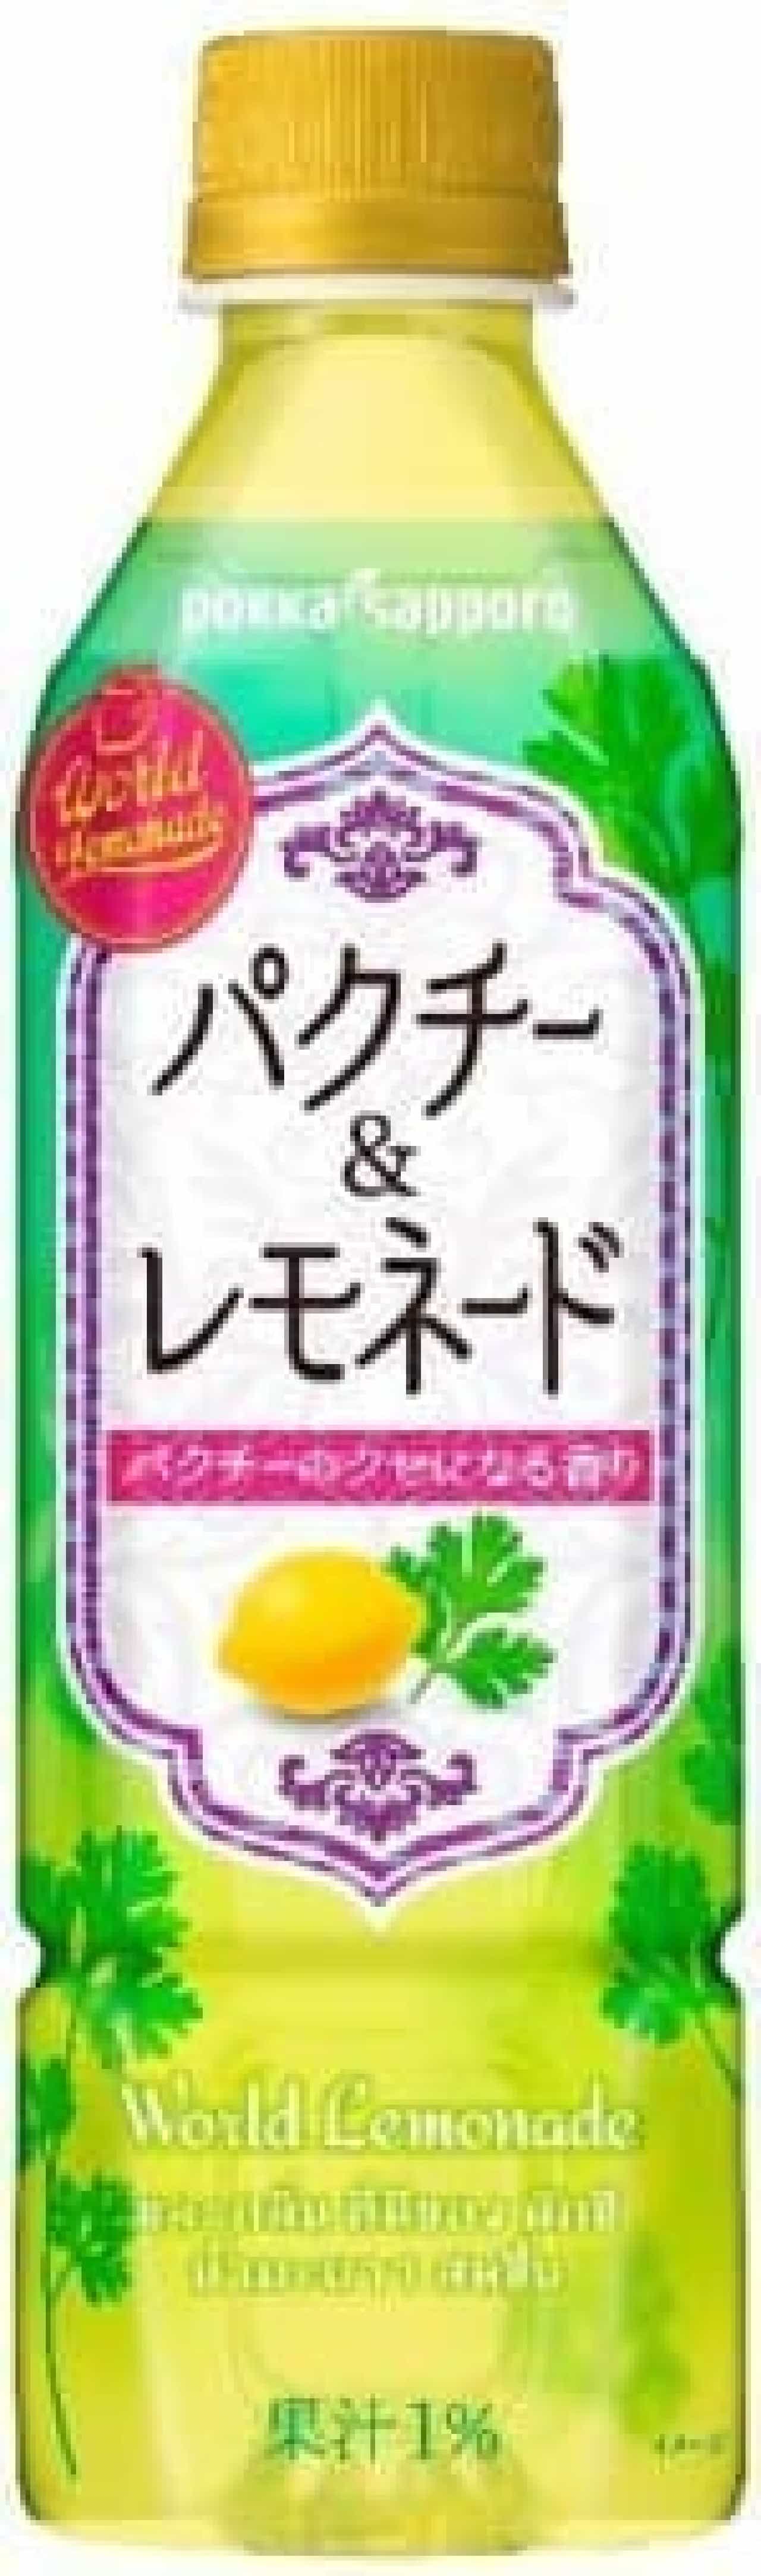 Pokka Sapporo Food & Beverage "World Lemonade Pakuchi & Lemonade"